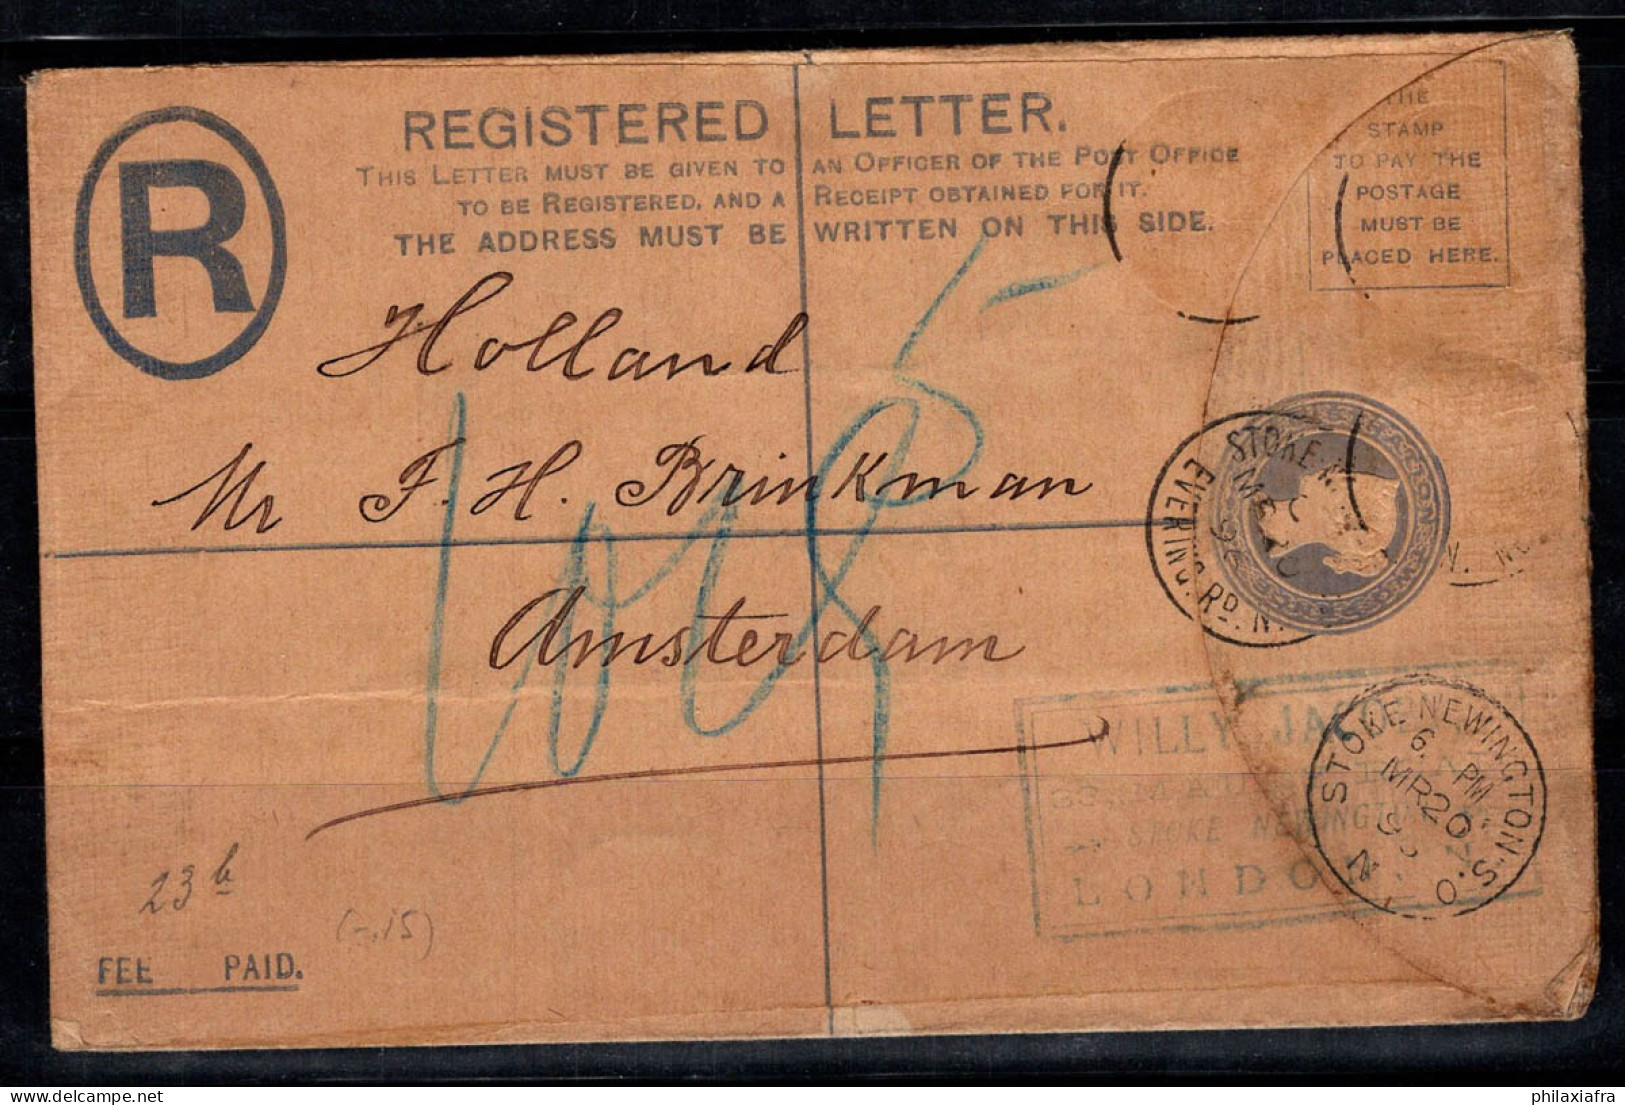 Grande-Bretagne 1896 Enveloppe 100% Recommandée Amsterdam, Reine Victoria - Covers & Documents